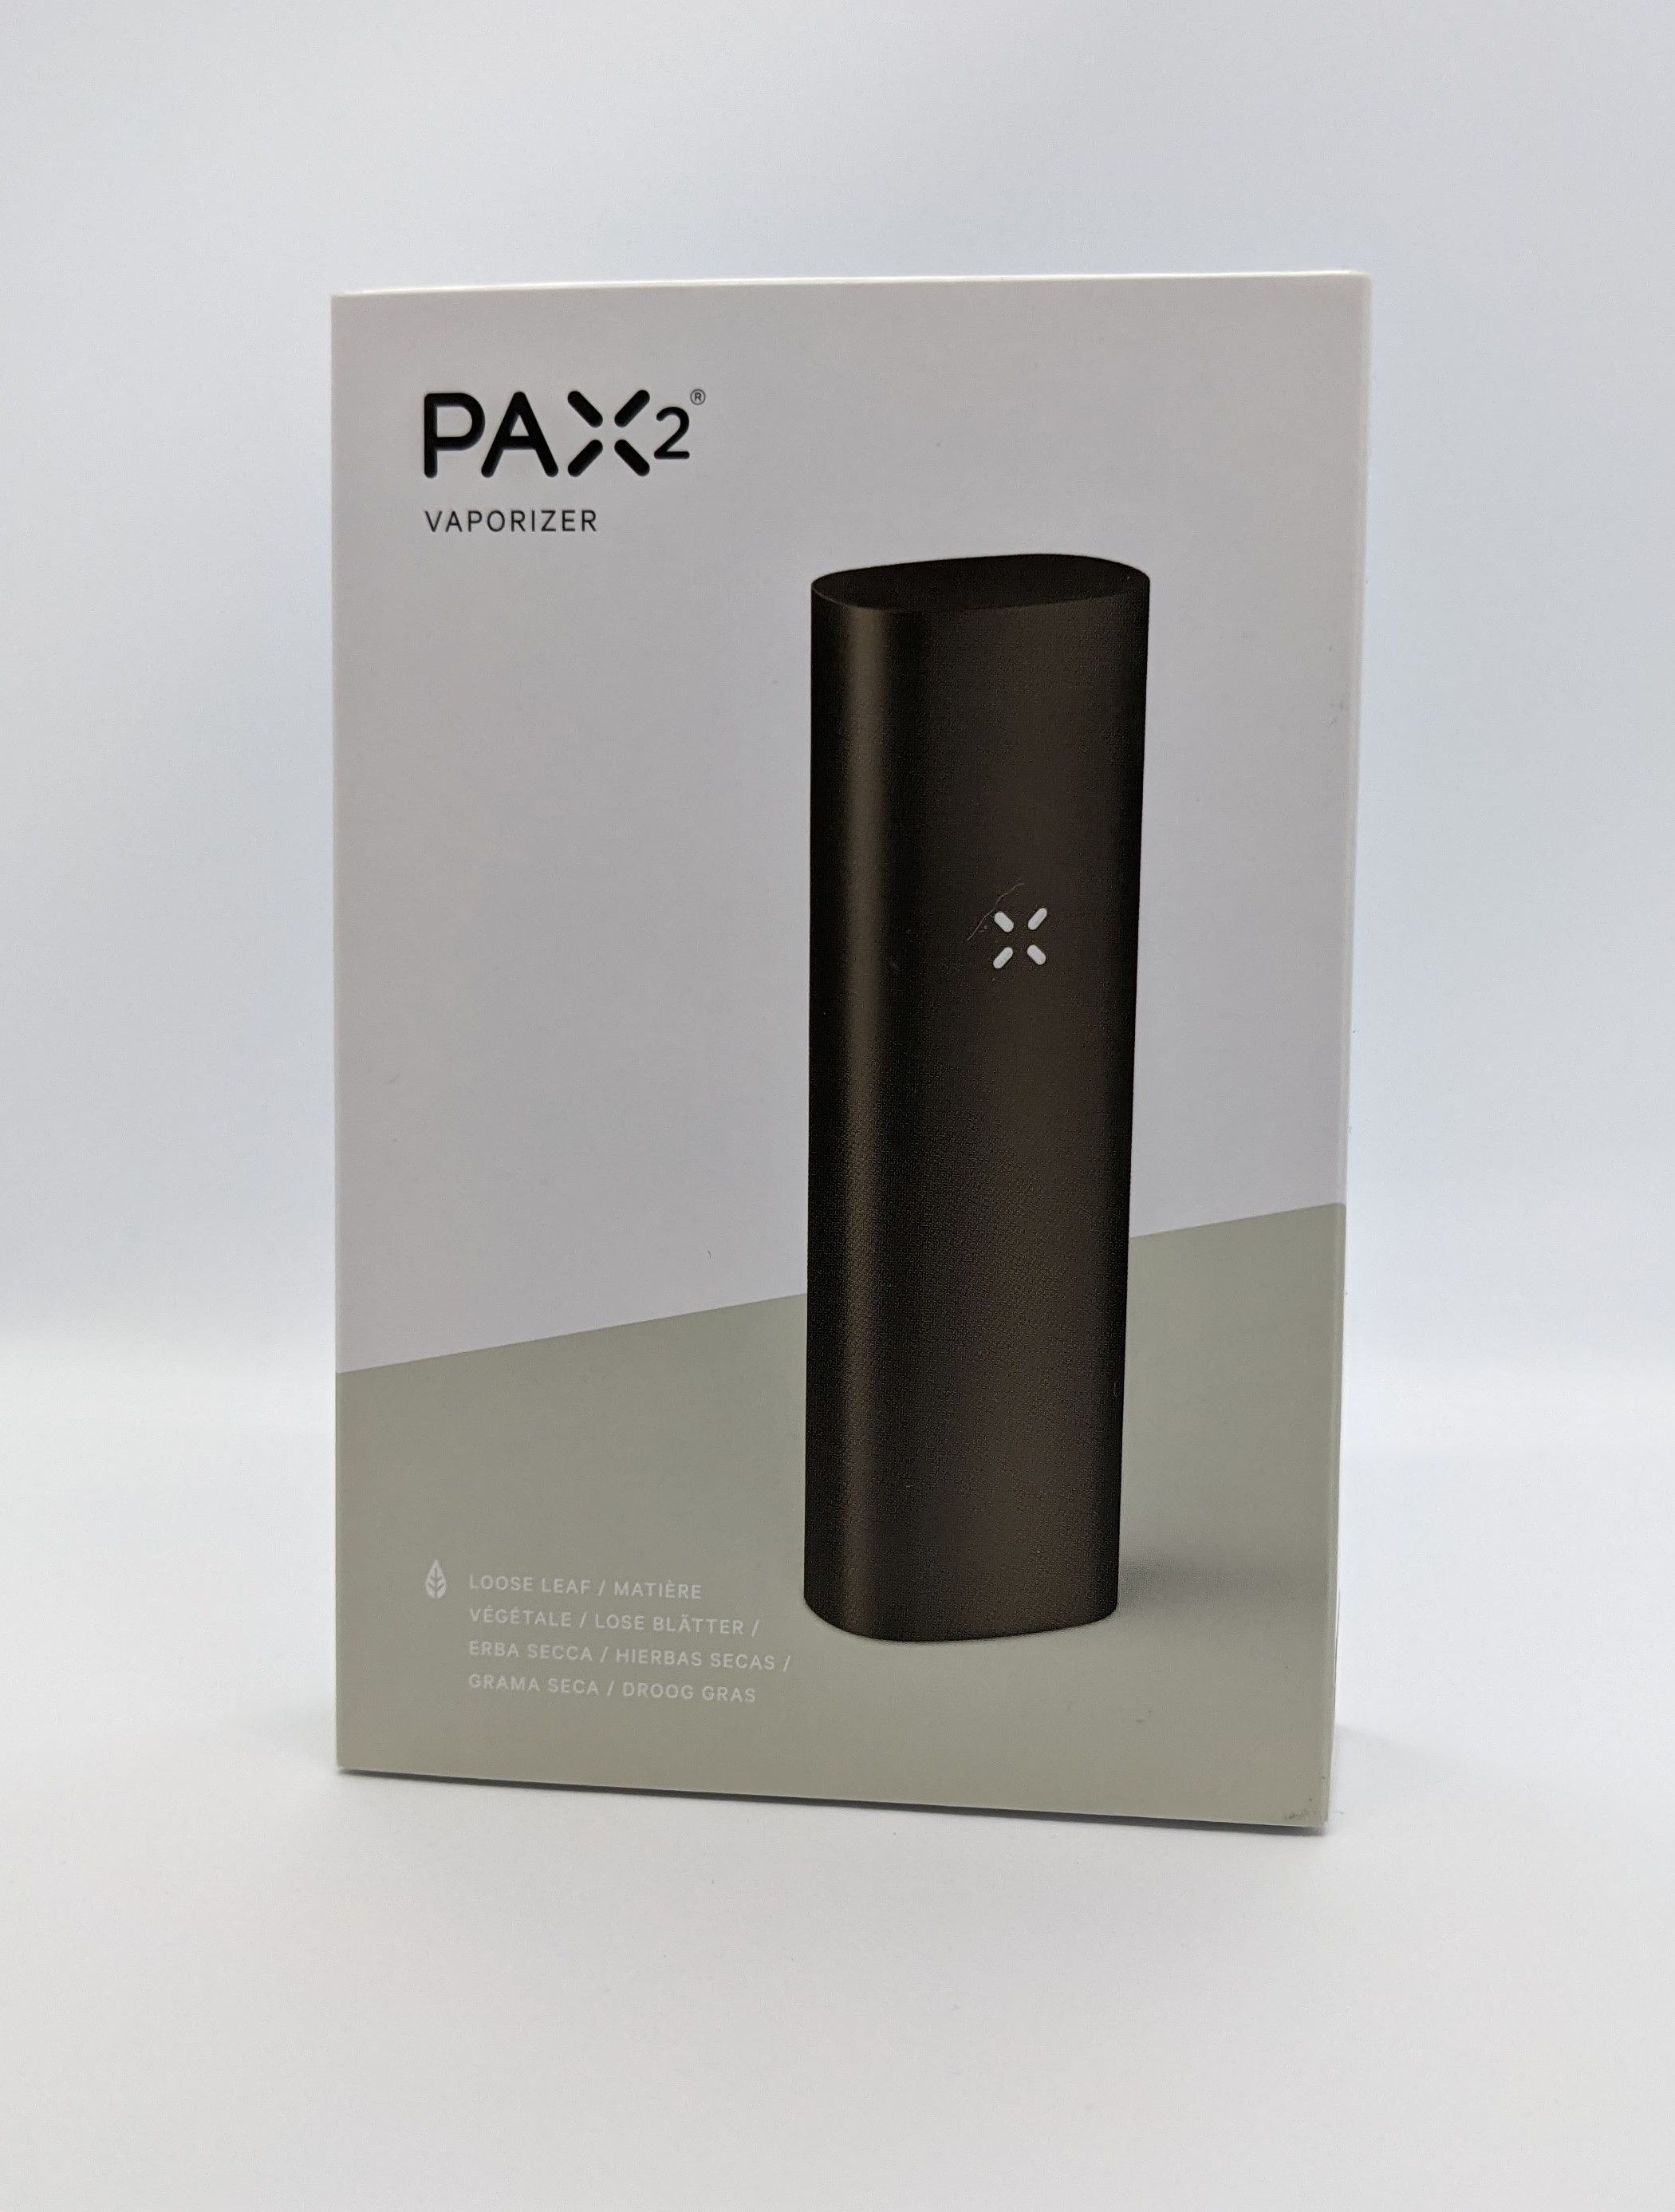 Pax 2 box front